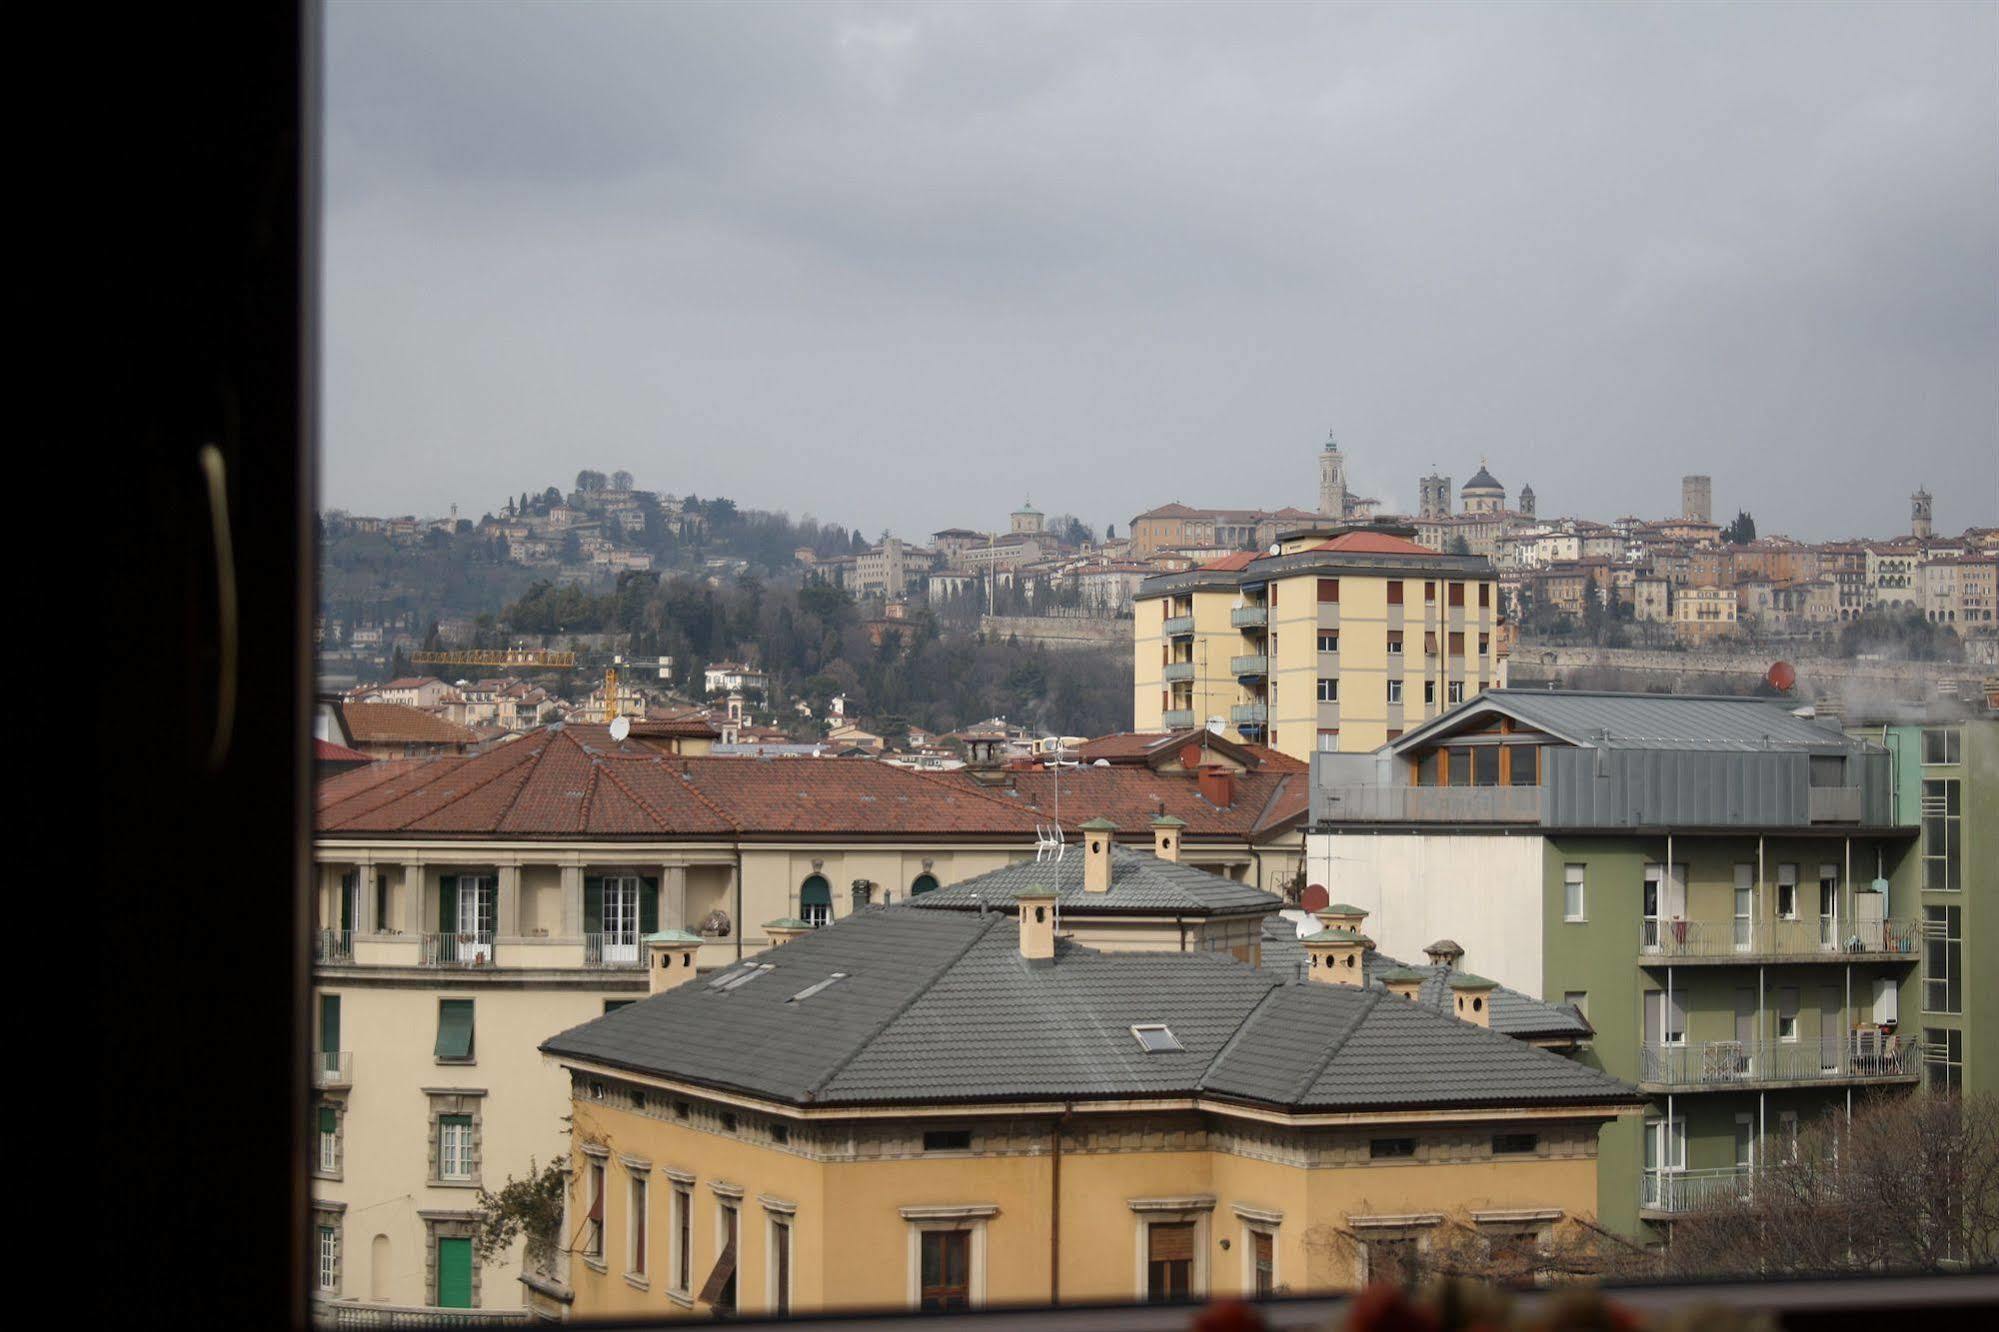 Bergamo Romantica المظهر الخارجي الصورة